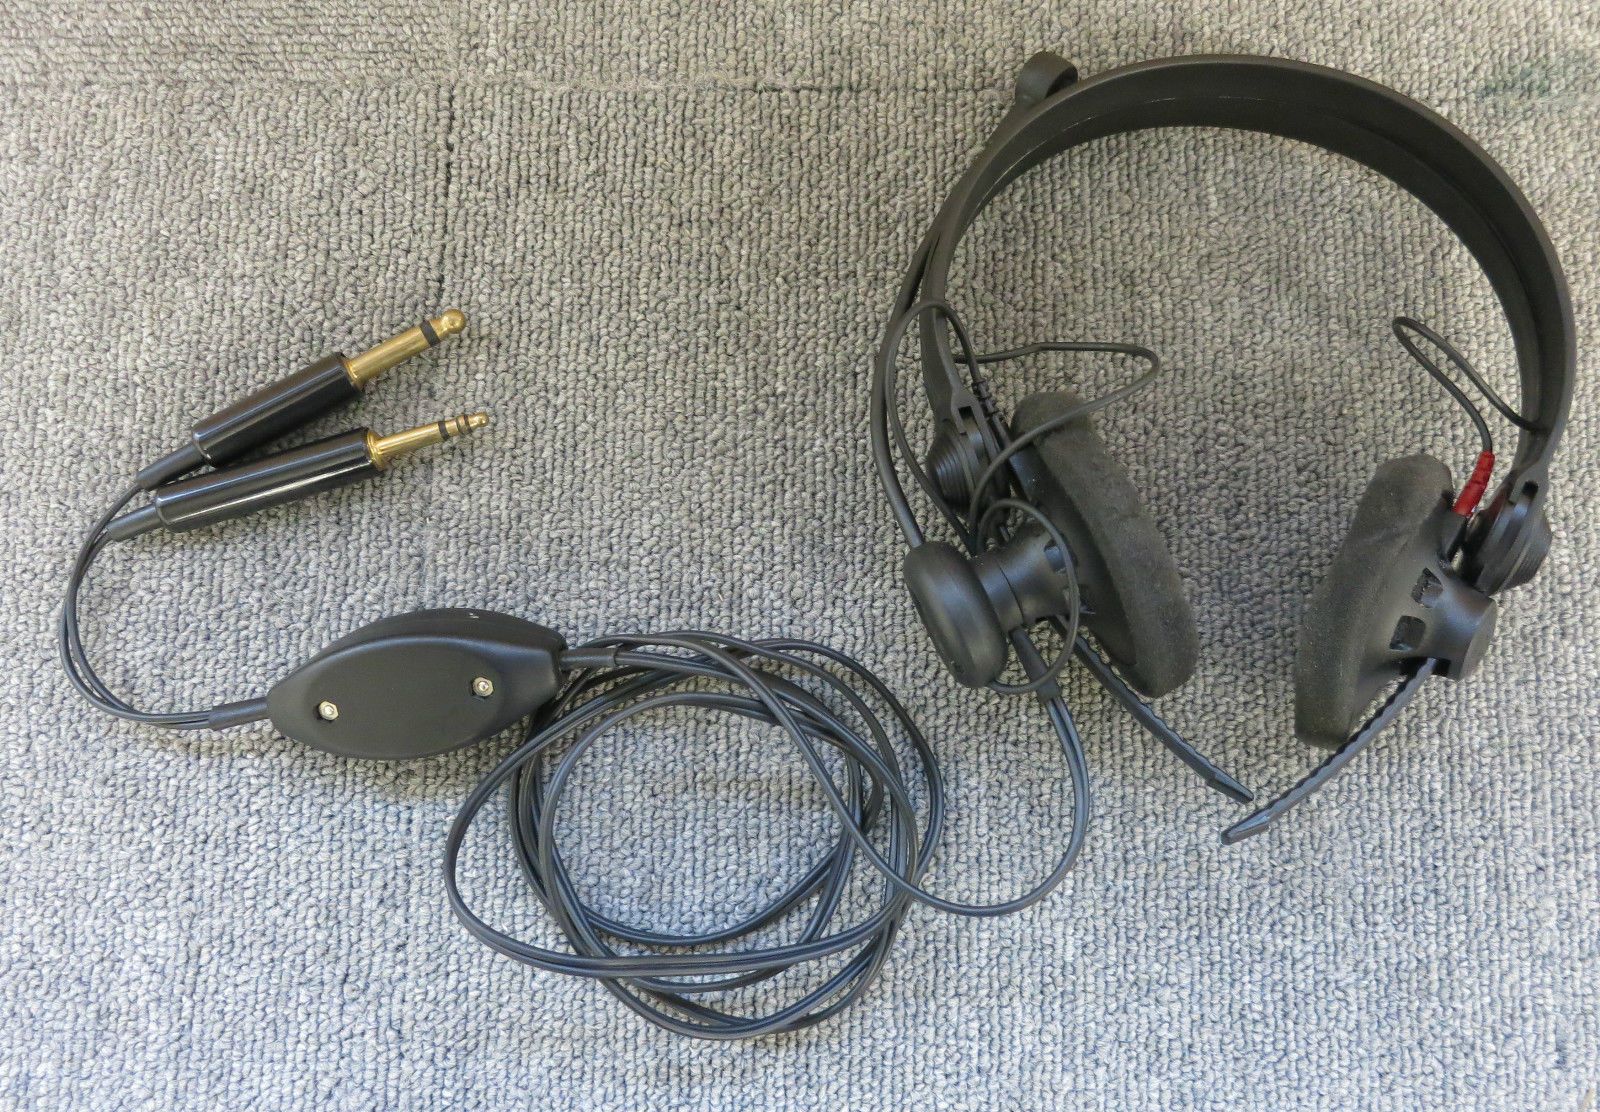 sennheiser-hme-1410-ka-aviation-headset-with-pj-plugs-with-flexible-microphone-19072-p.jpg